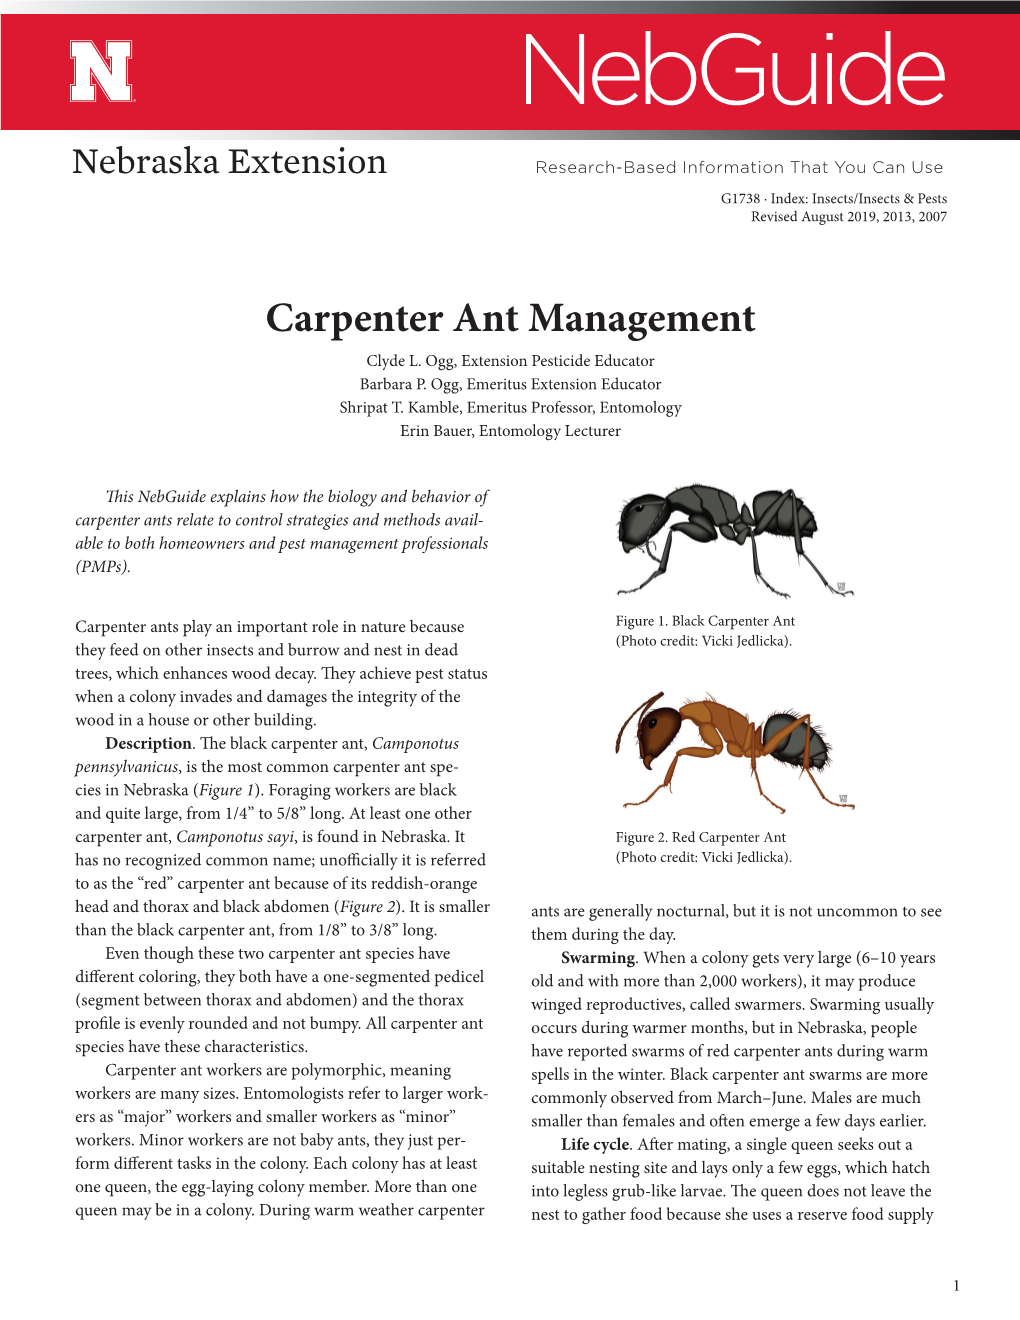 Carpenter Ant Management Clyde L